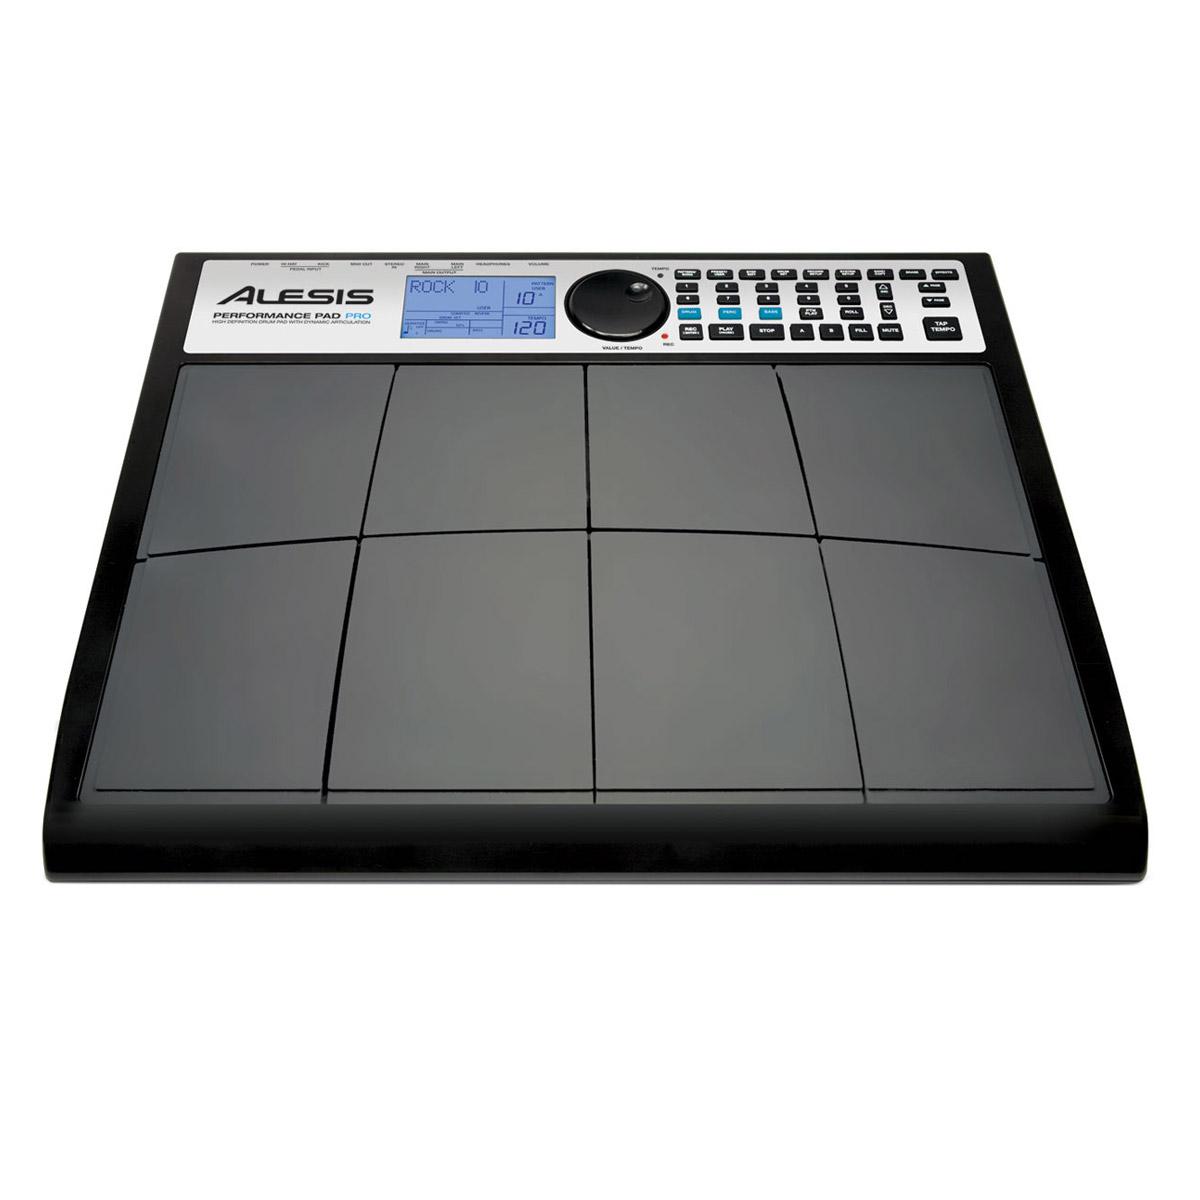 Foto Bateria Electronica Alesis PerformancePad Pro